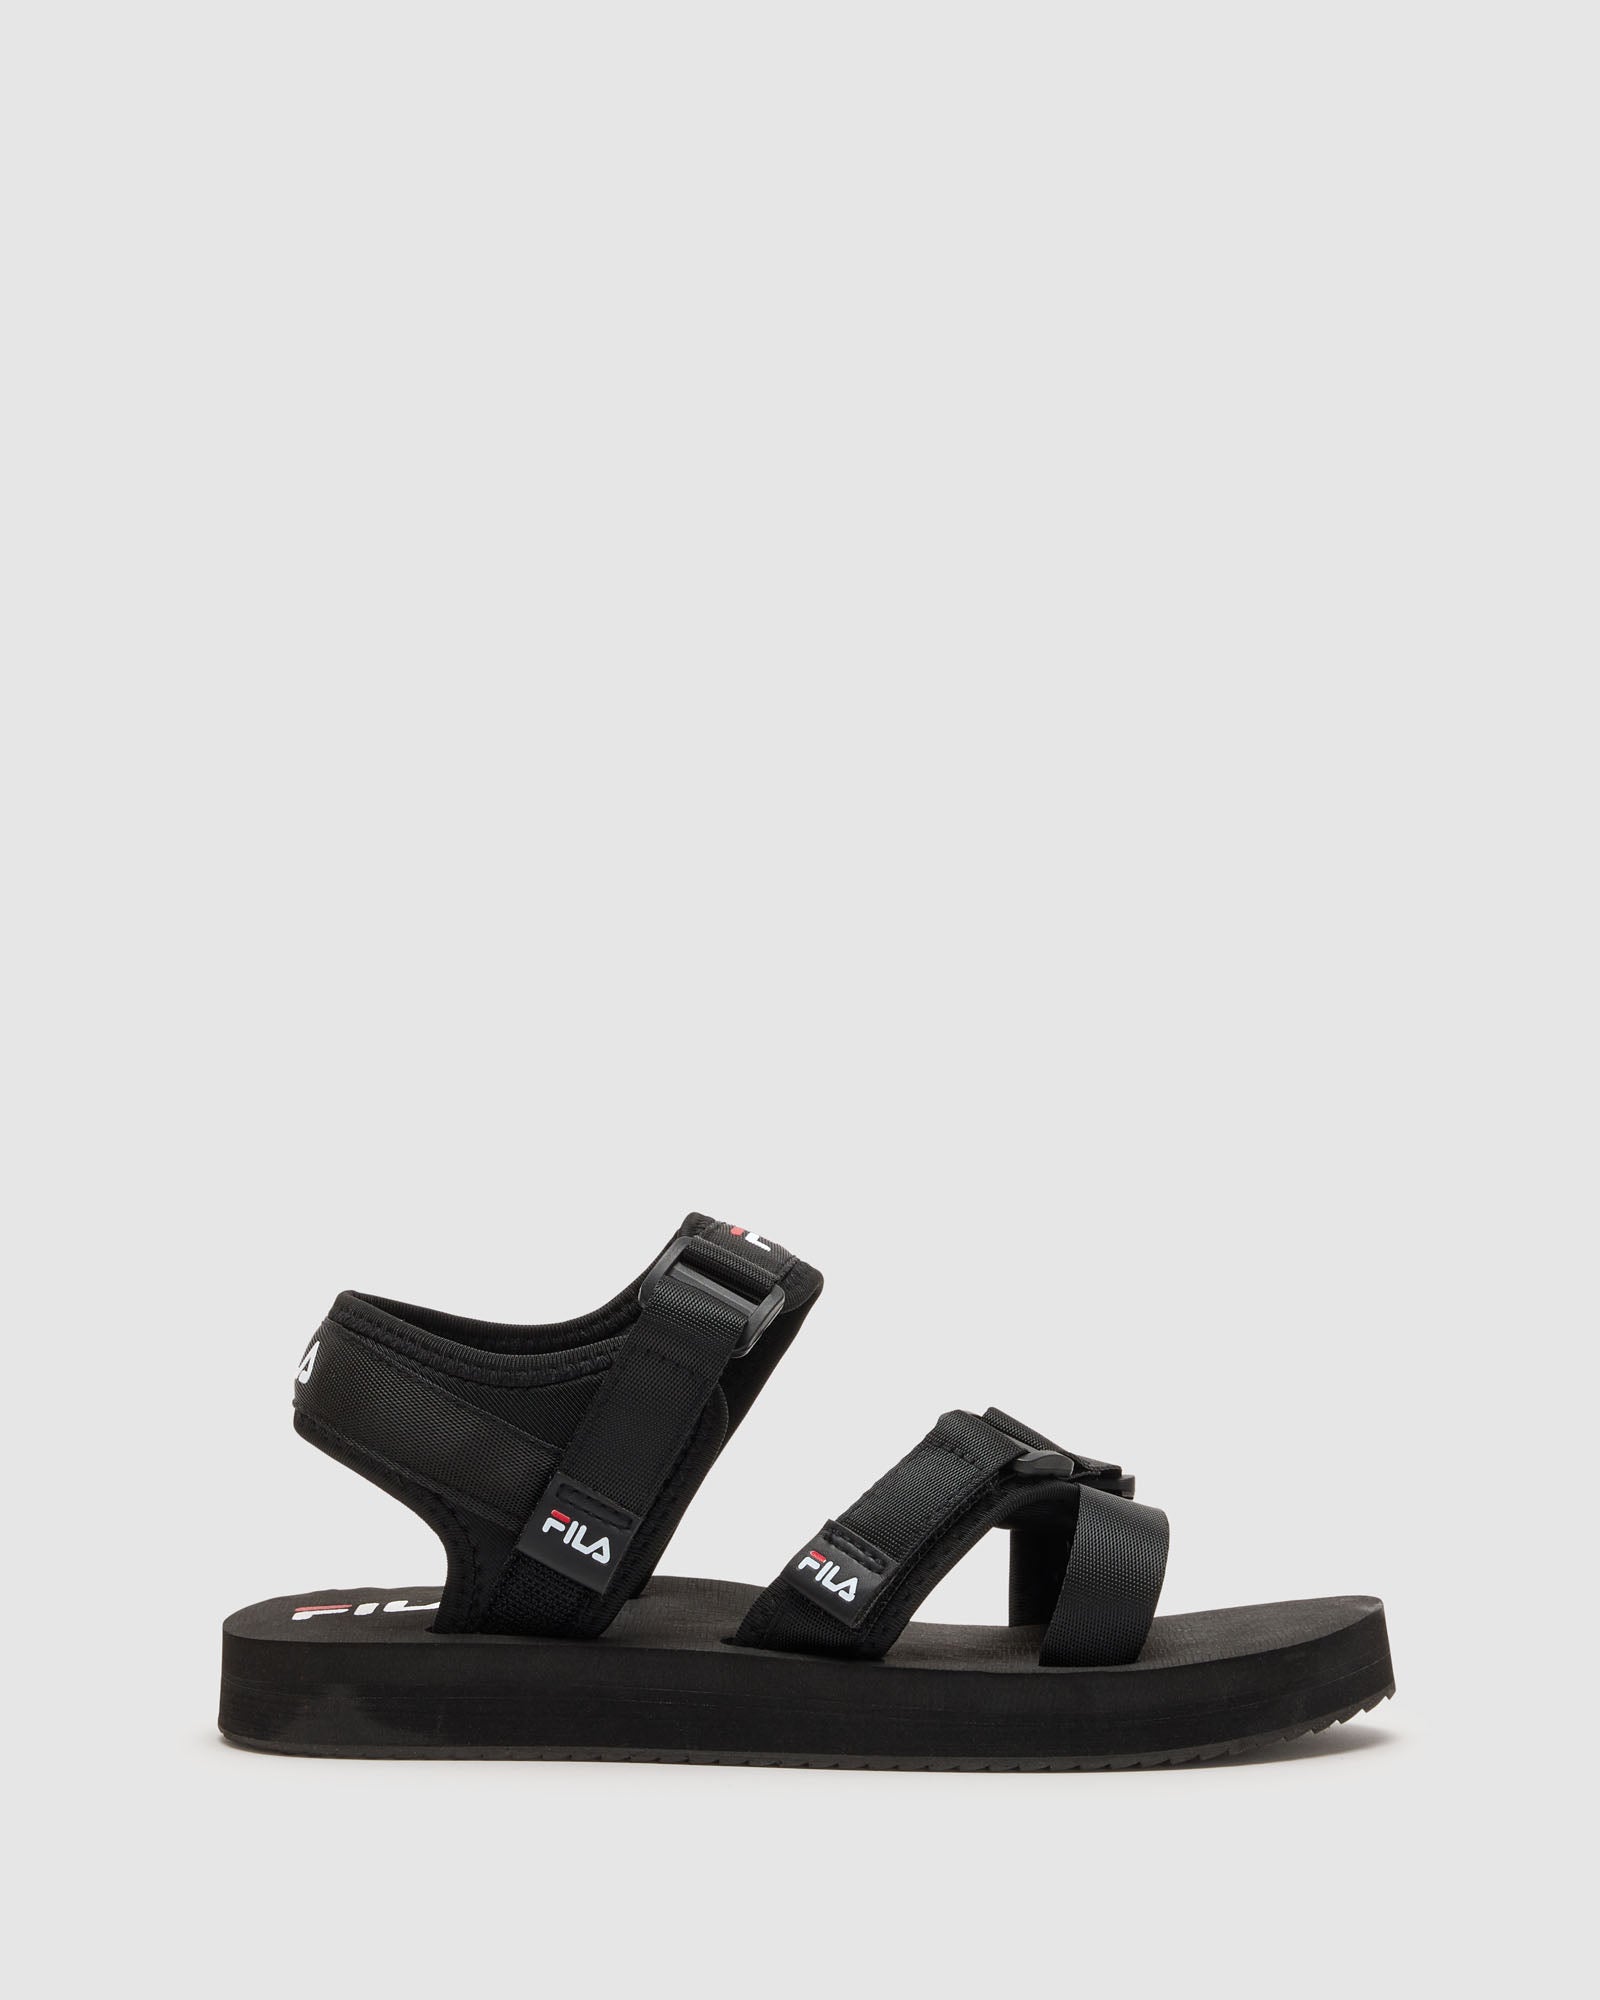 Fila Mens SLUGGER Black Casual-Sandals : Amazon.in: Shoes & Handbags